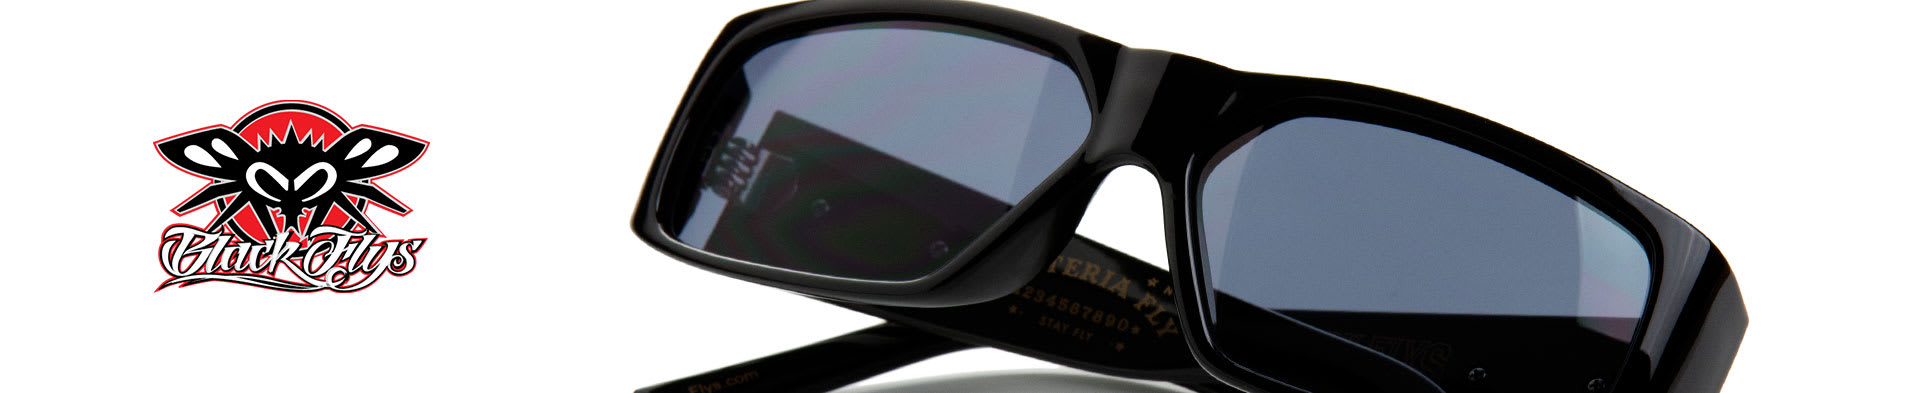 Shop Black Flys Sunglasses